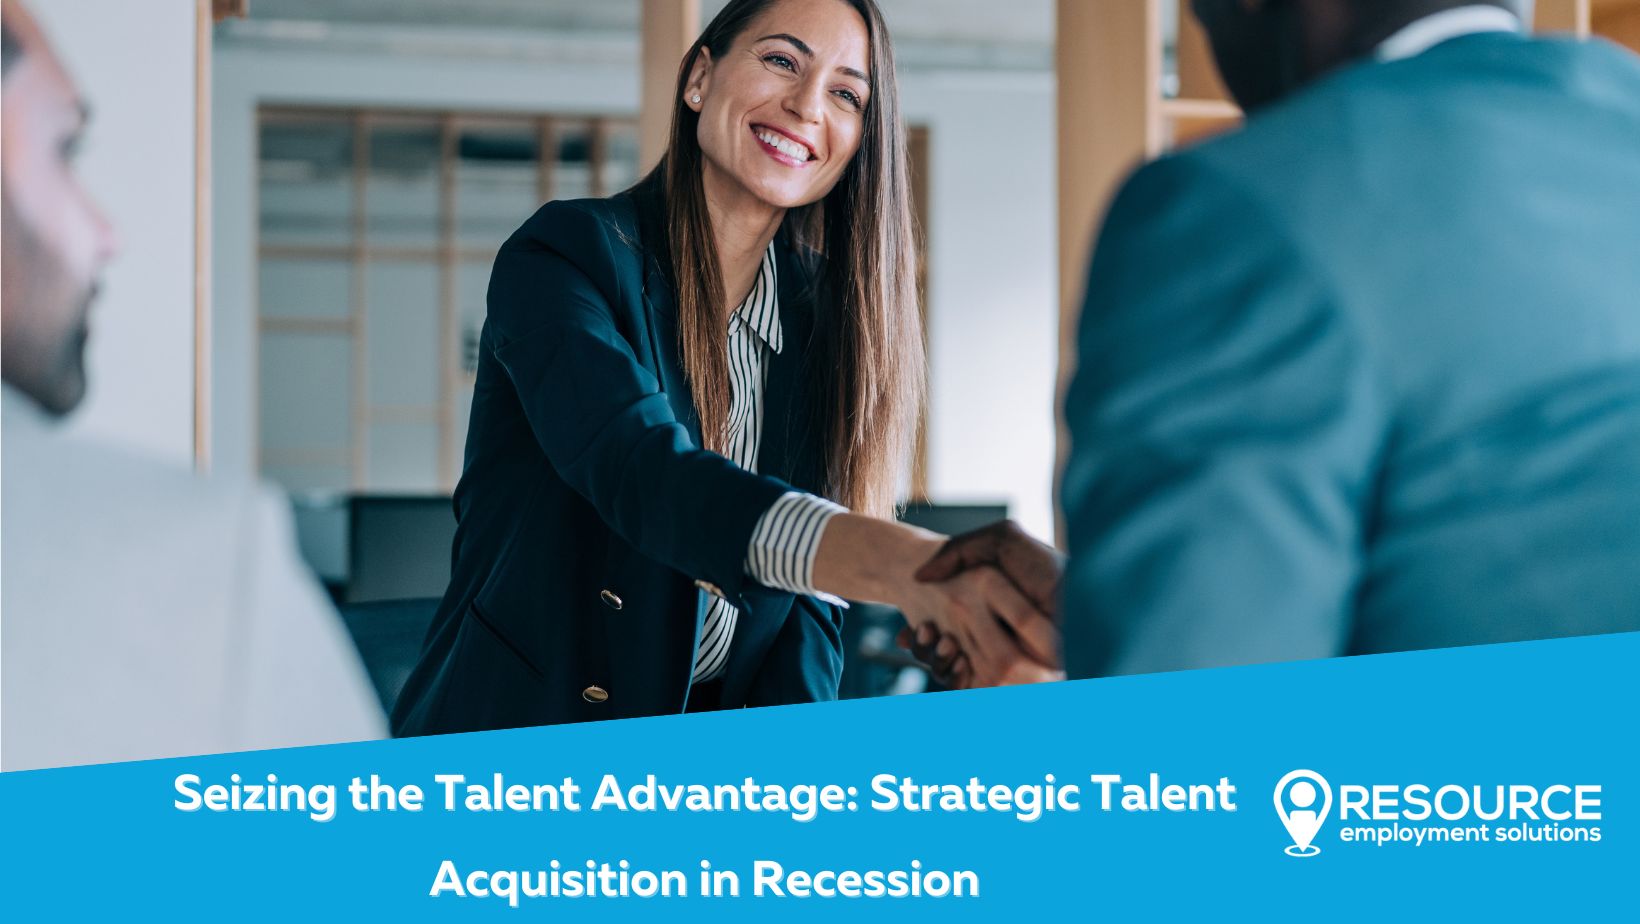 Seizing the Talent Advantage: Strategic Talent Acquisition in Recession